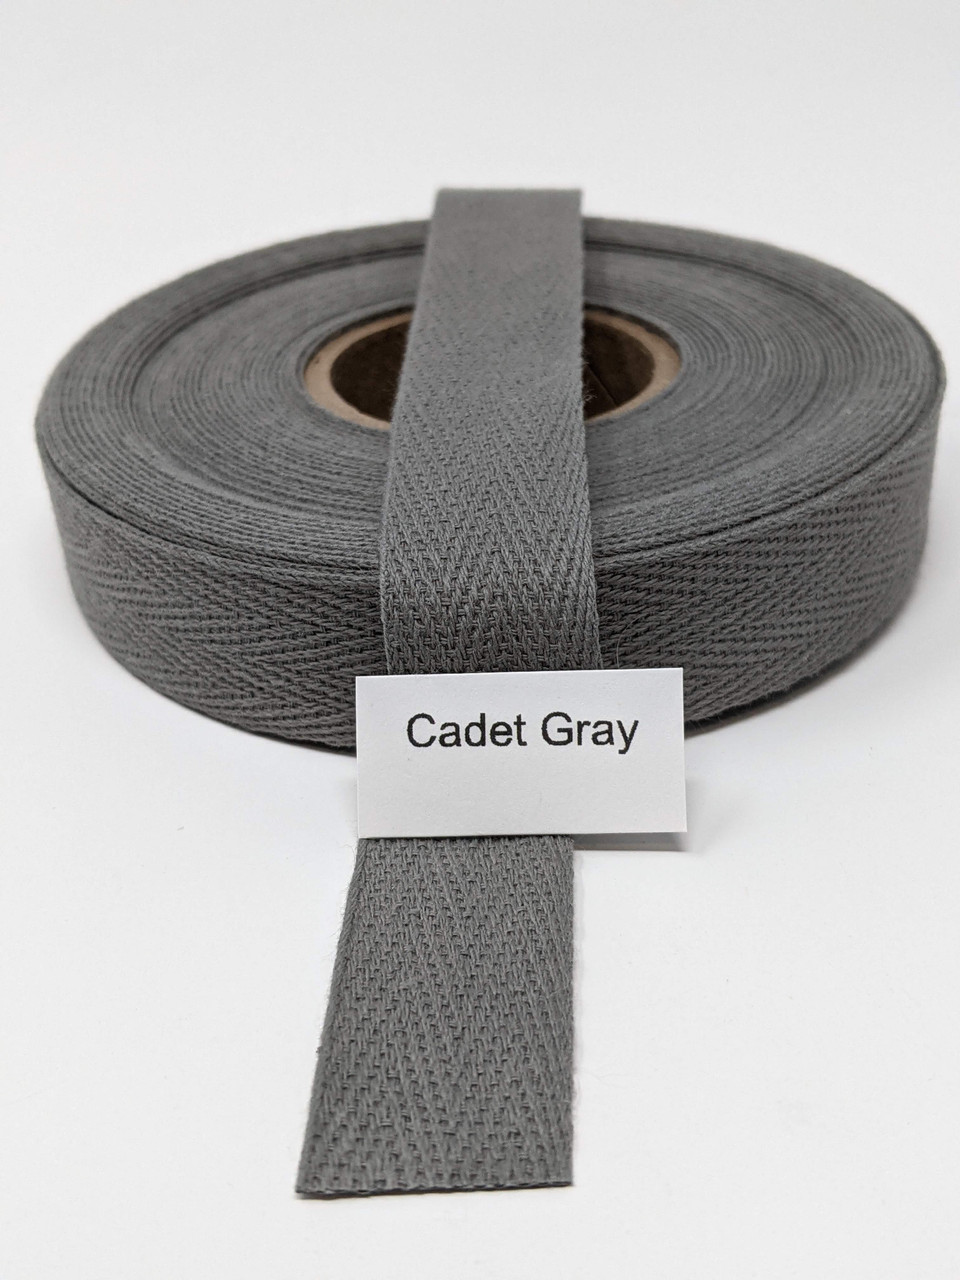 Cotton Twill Tape 3/4 Cadet Grey, 10 yard roll